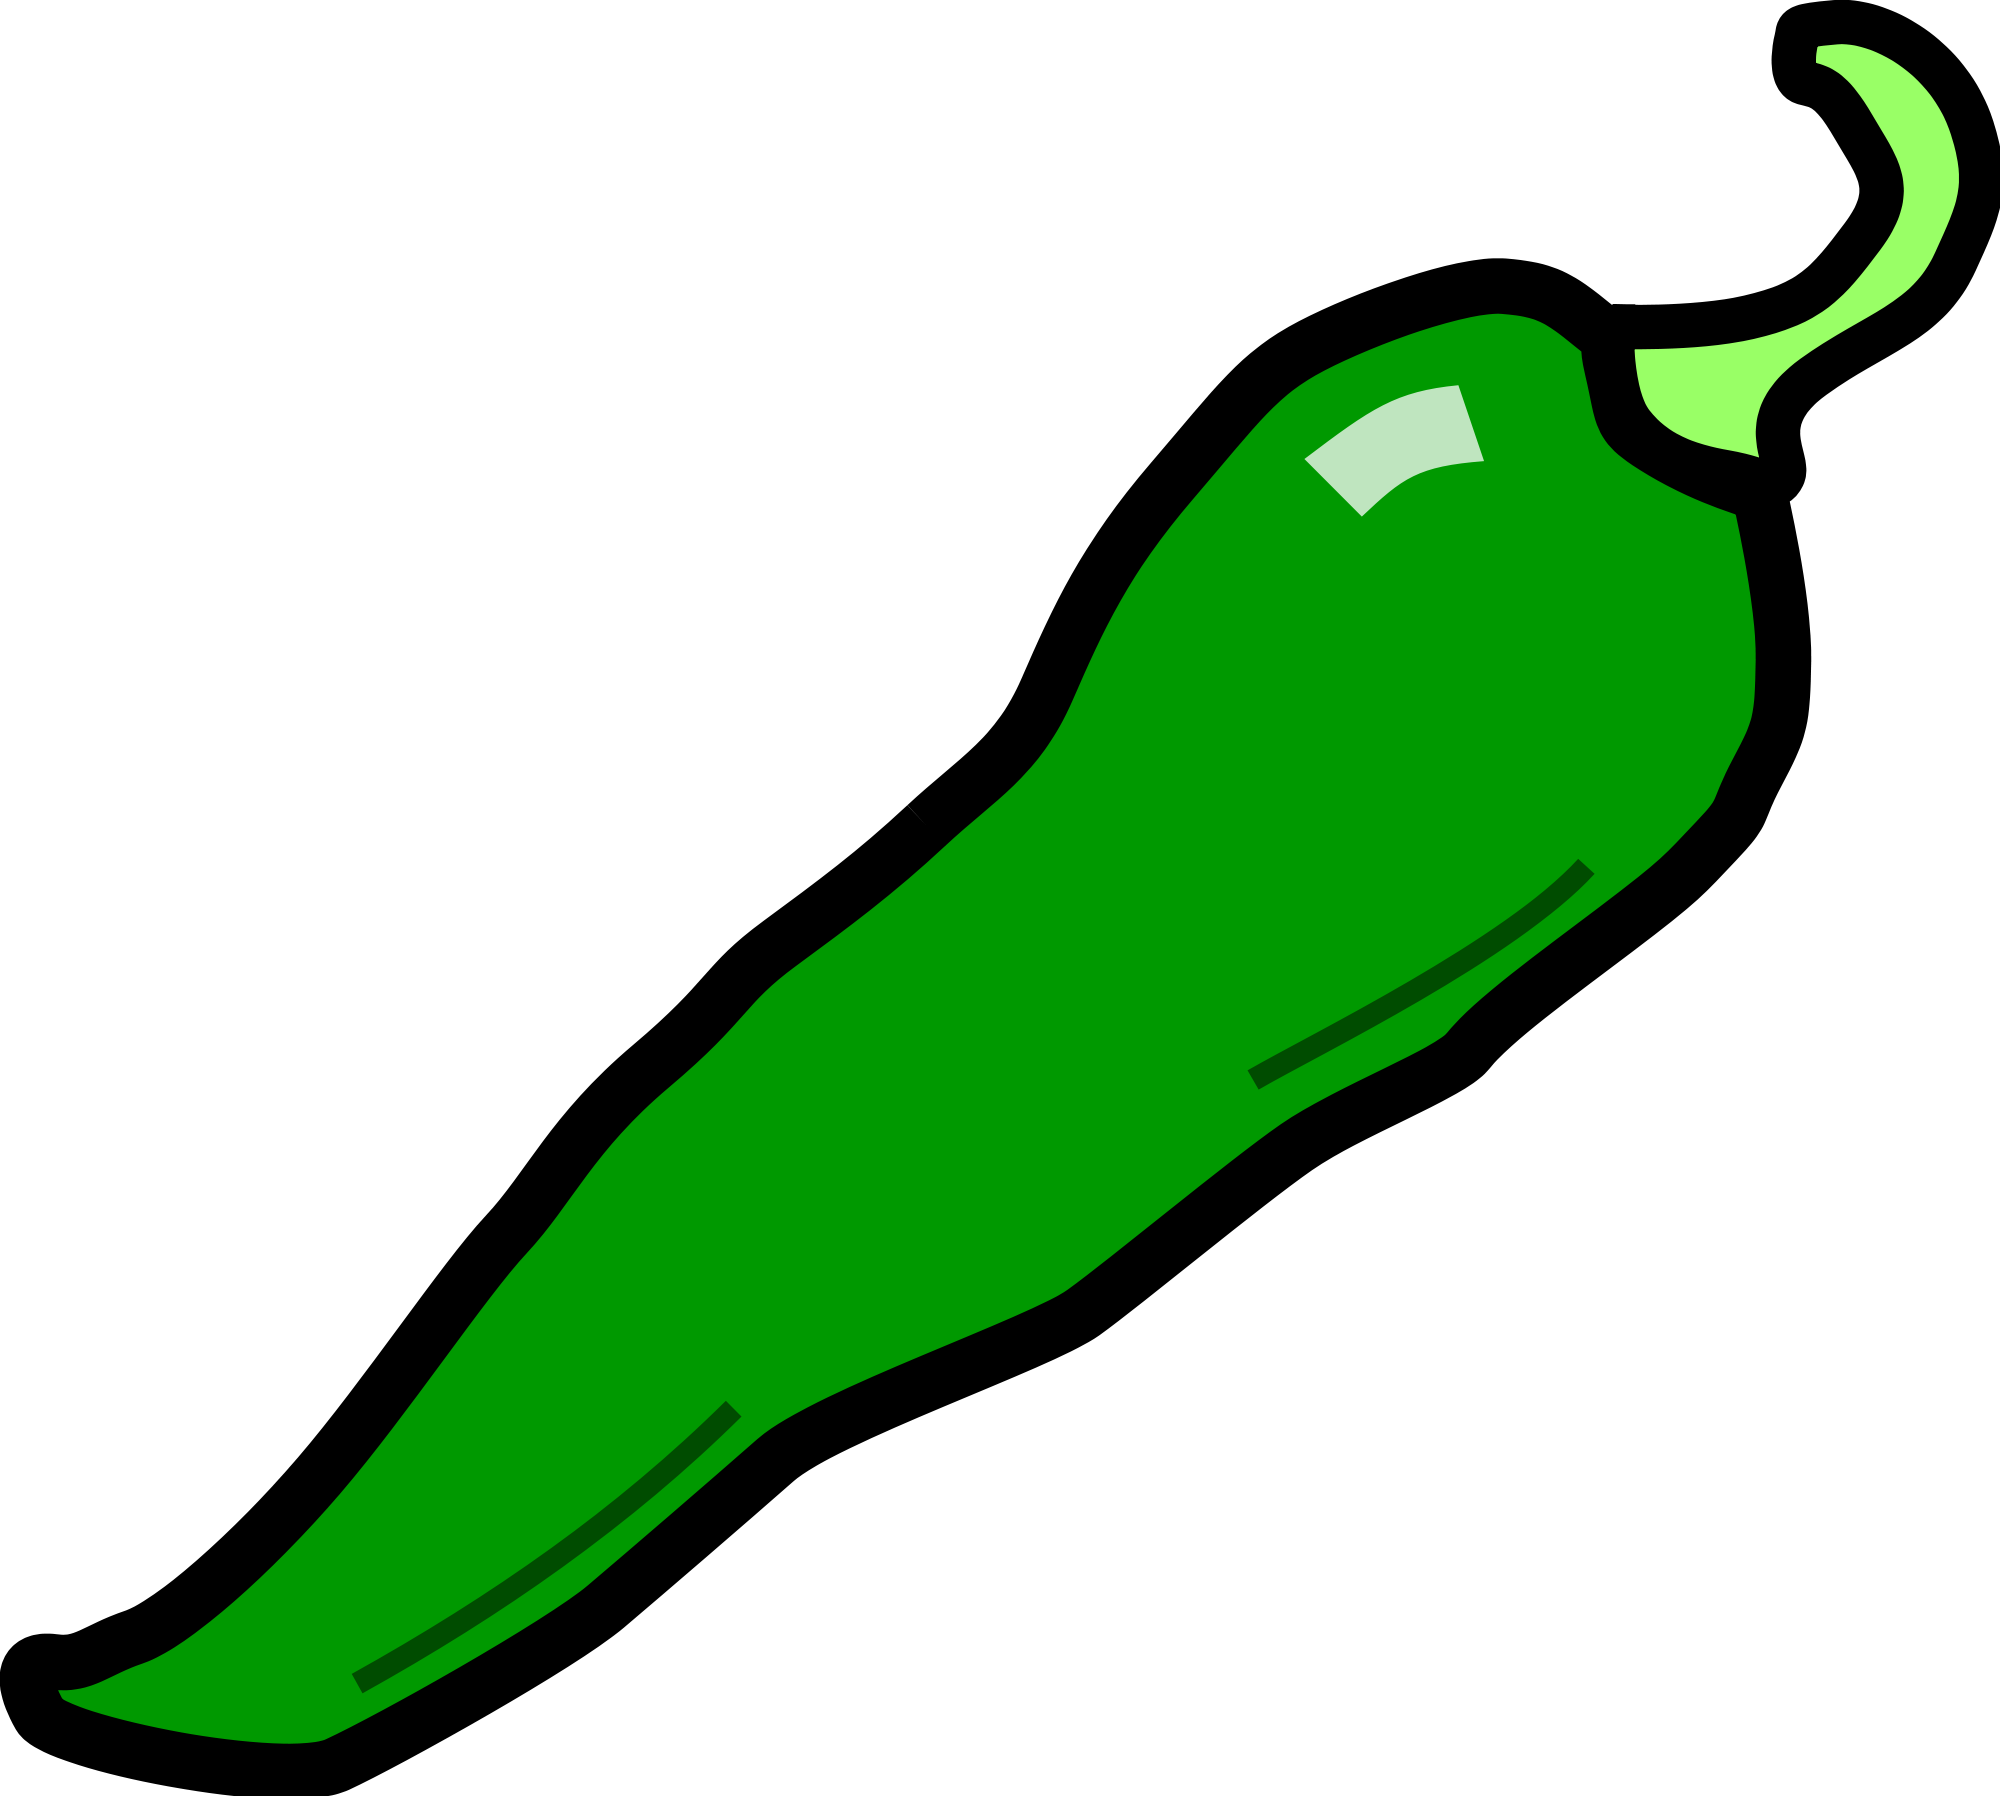 Green chili pepper clipart 